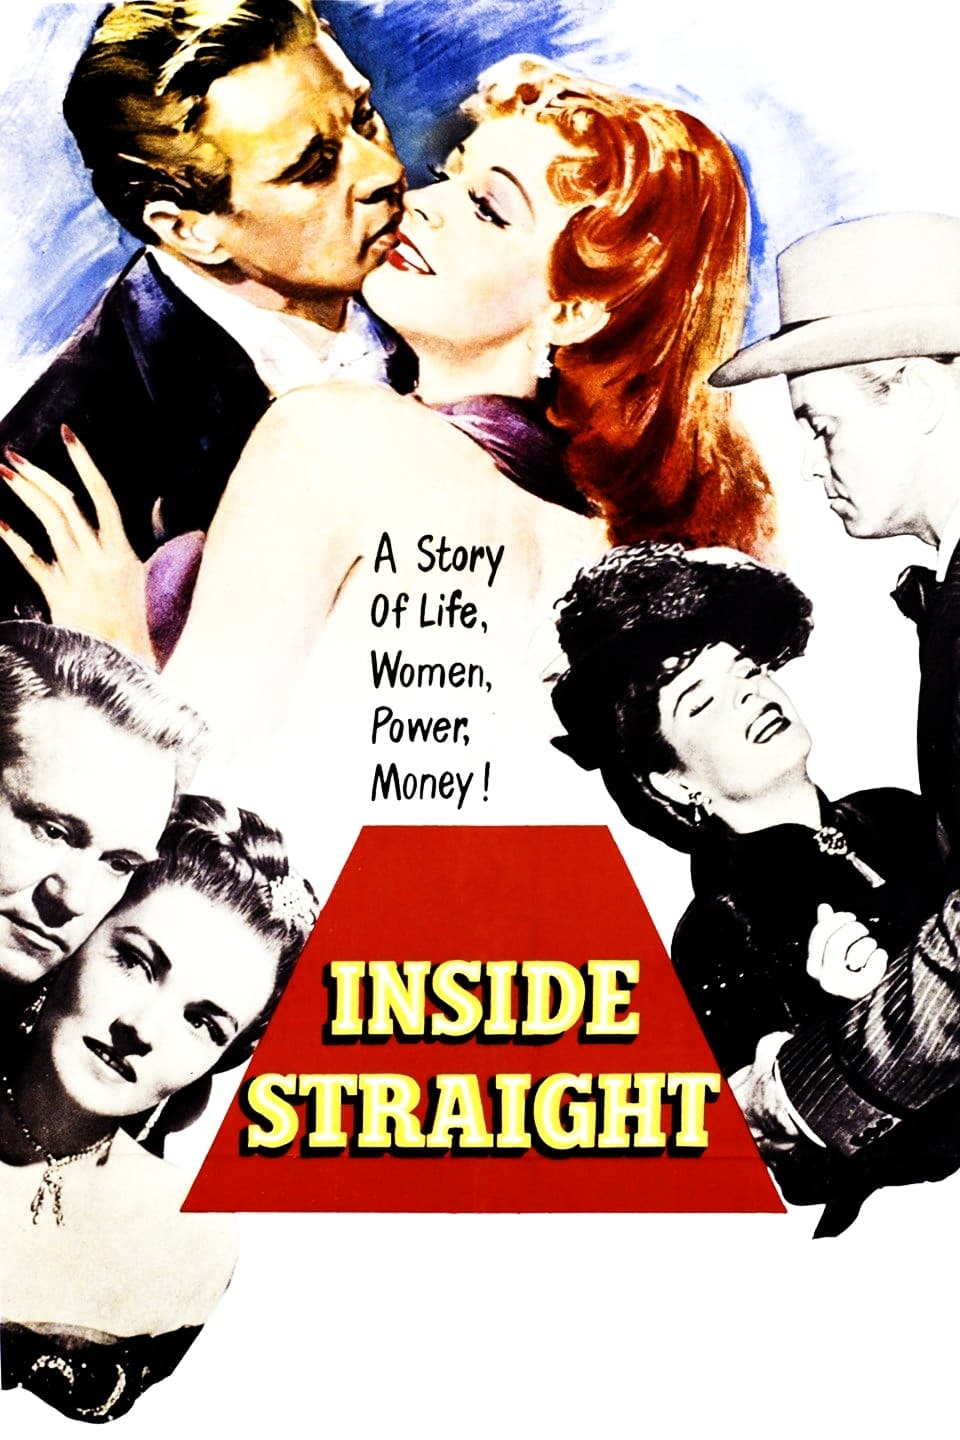 Inside Straight (1951)